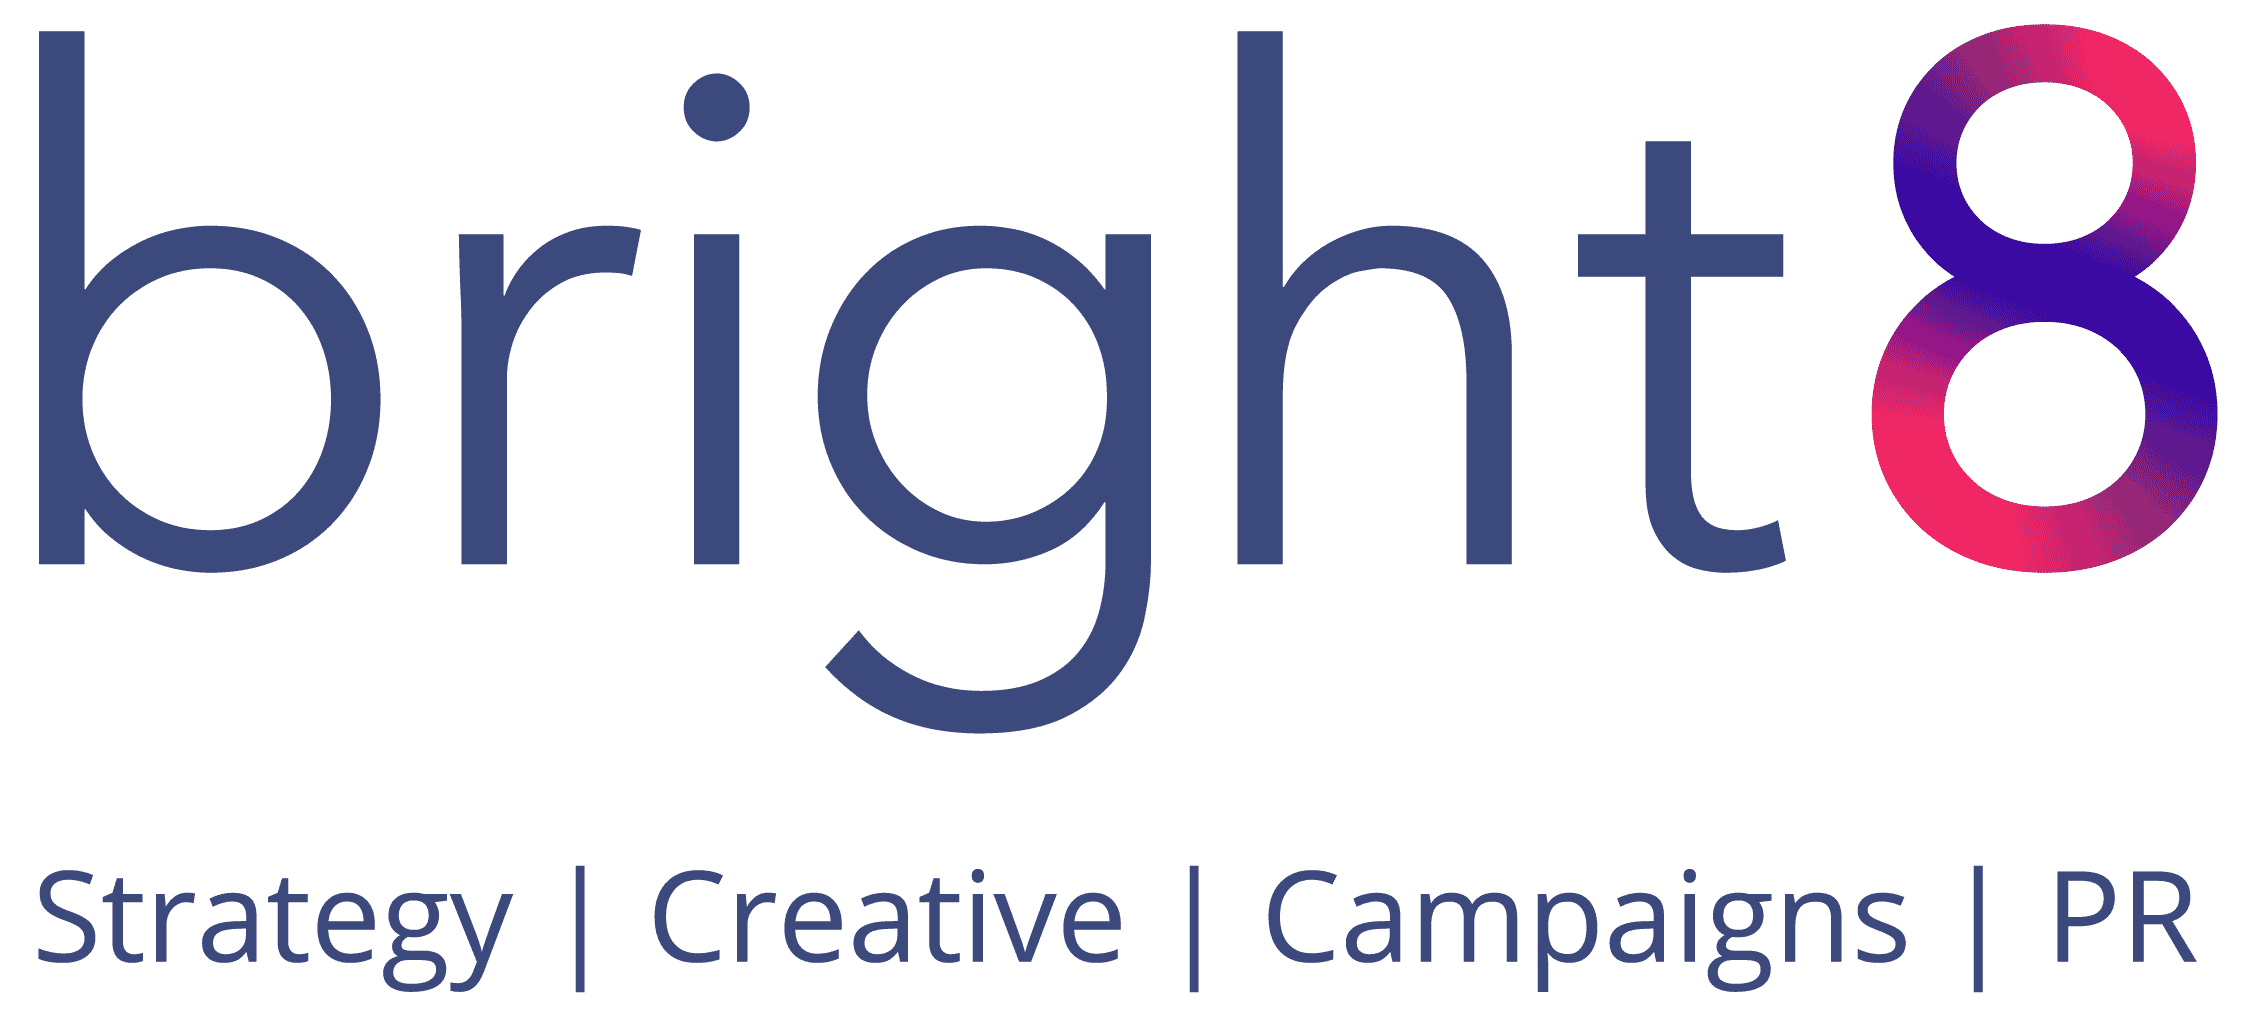 Bright Light Logo - Free Vectors & PSDs to Download